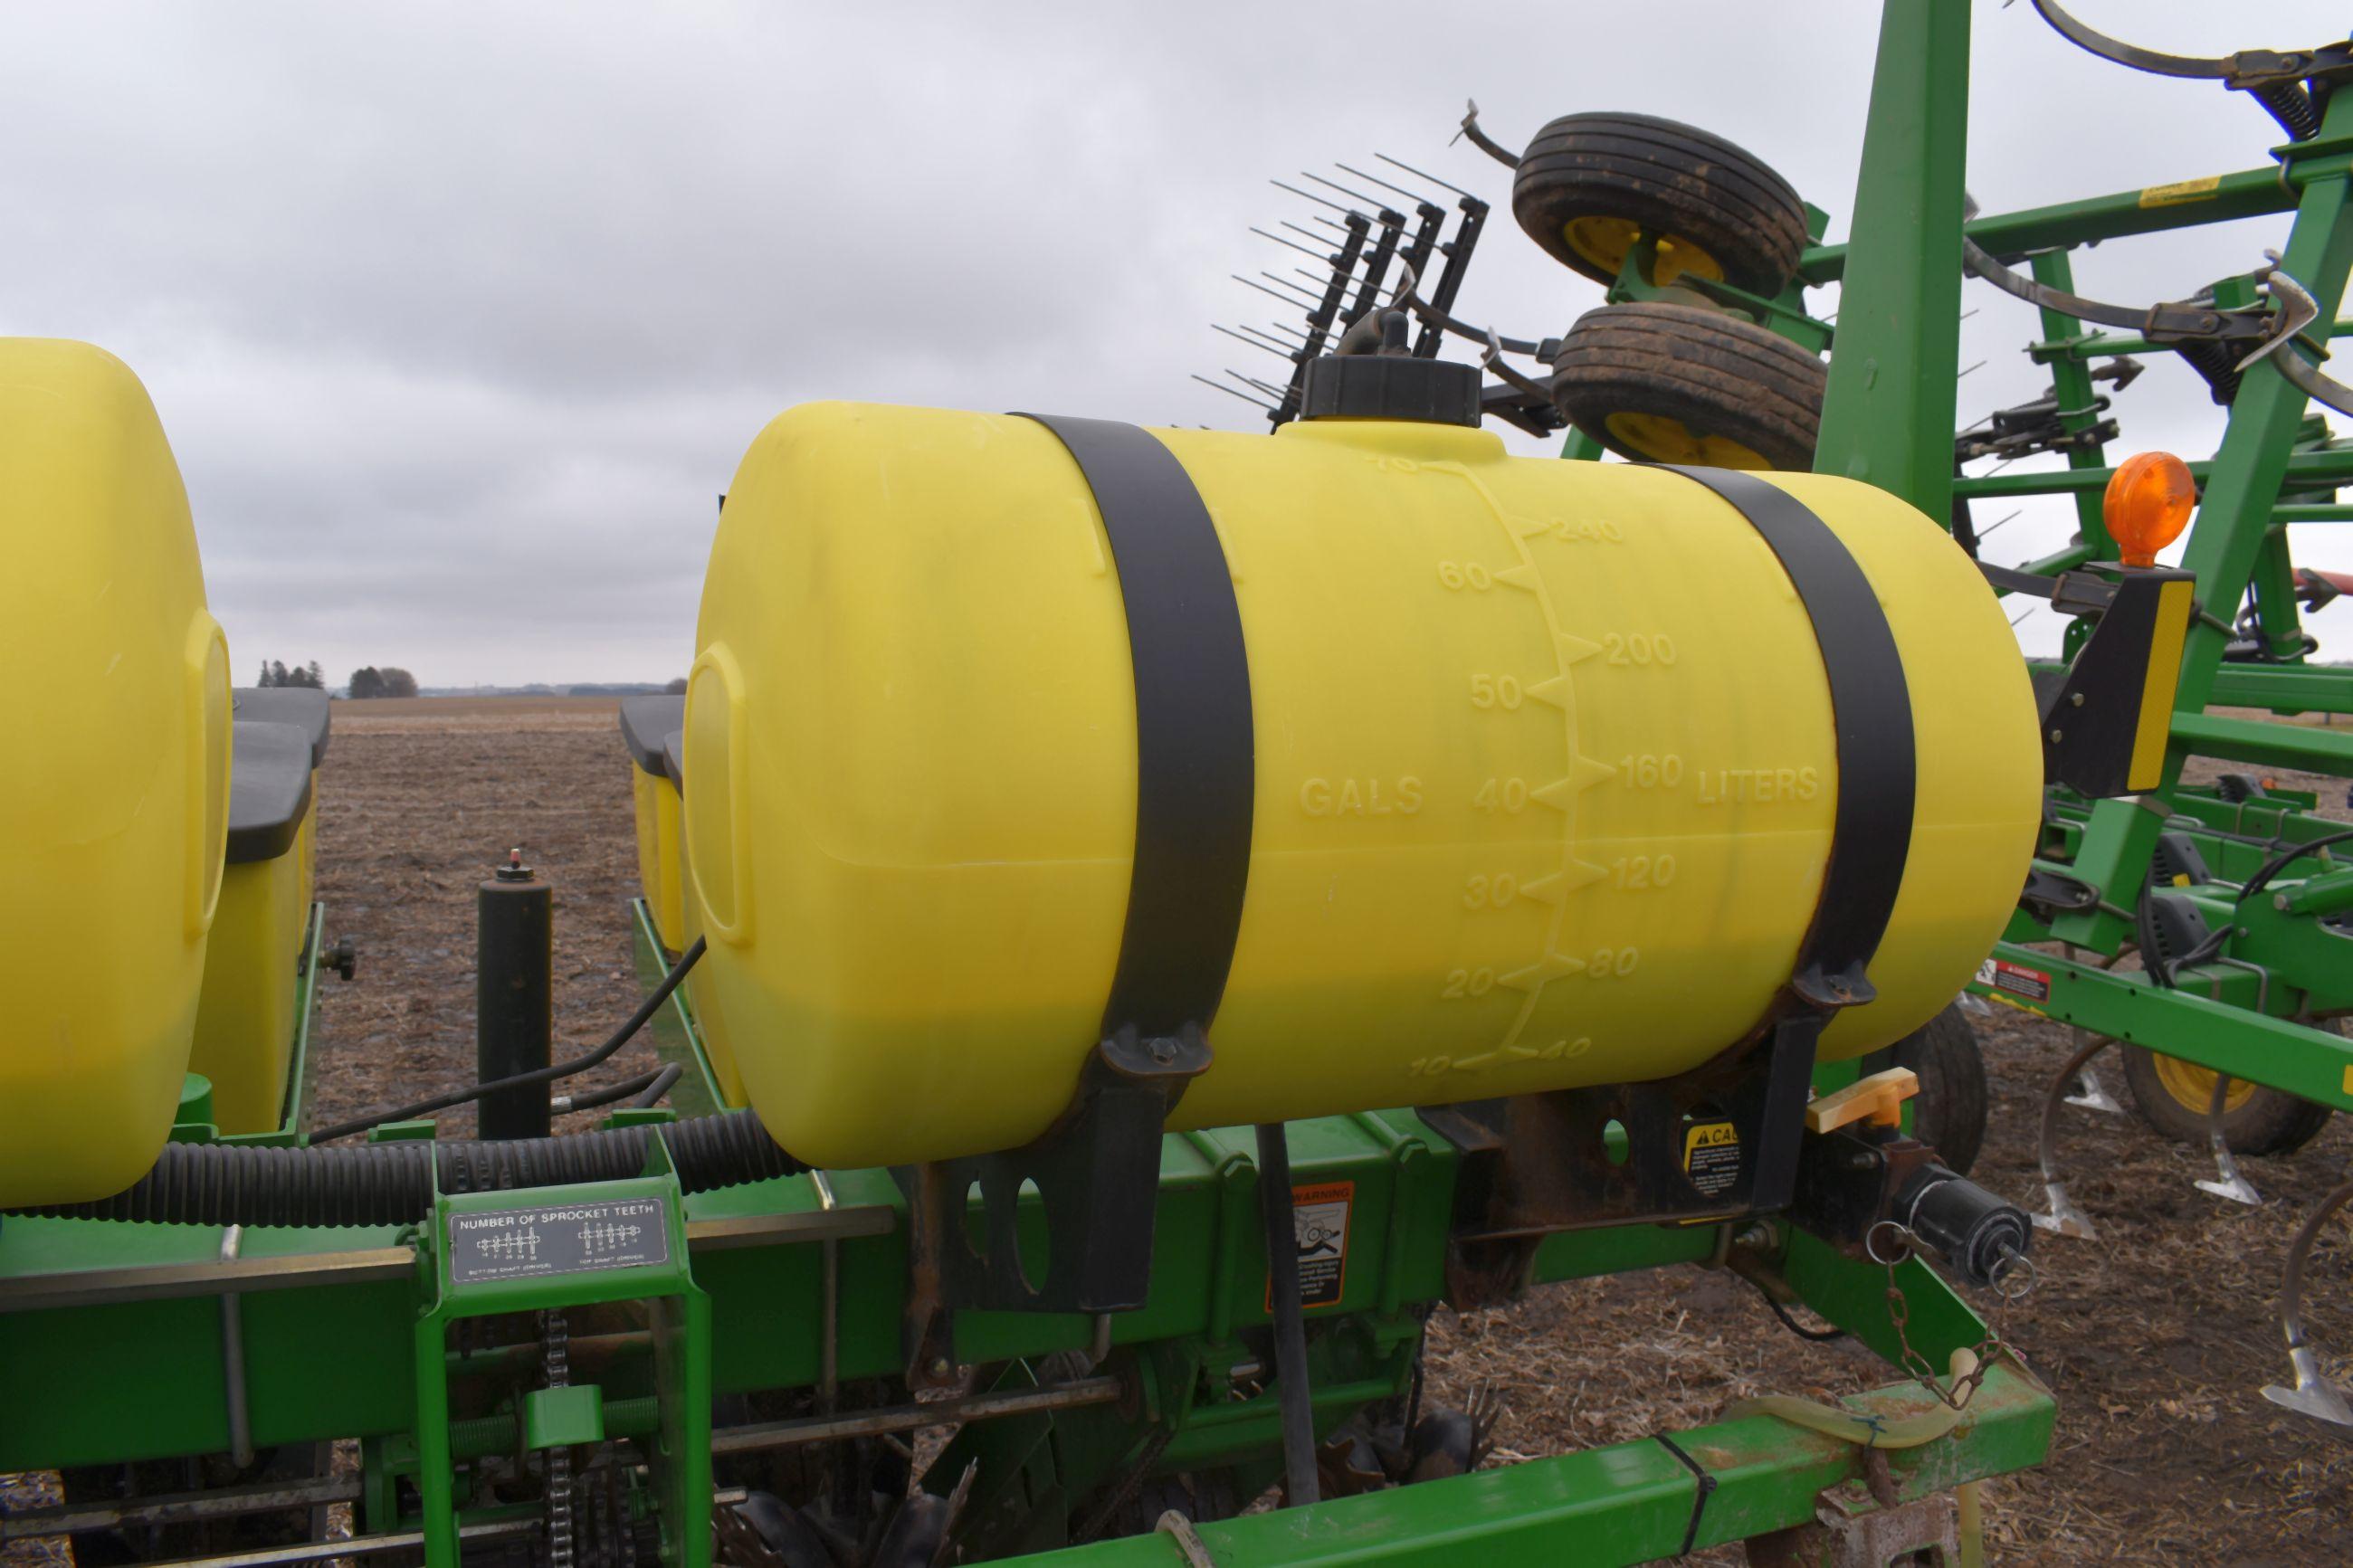 John Deere 1750 Max Emerge XP Planter 6Row30”, Liquid Fertilizer, (3) 70 Gallon Poly Fertilizer Tank